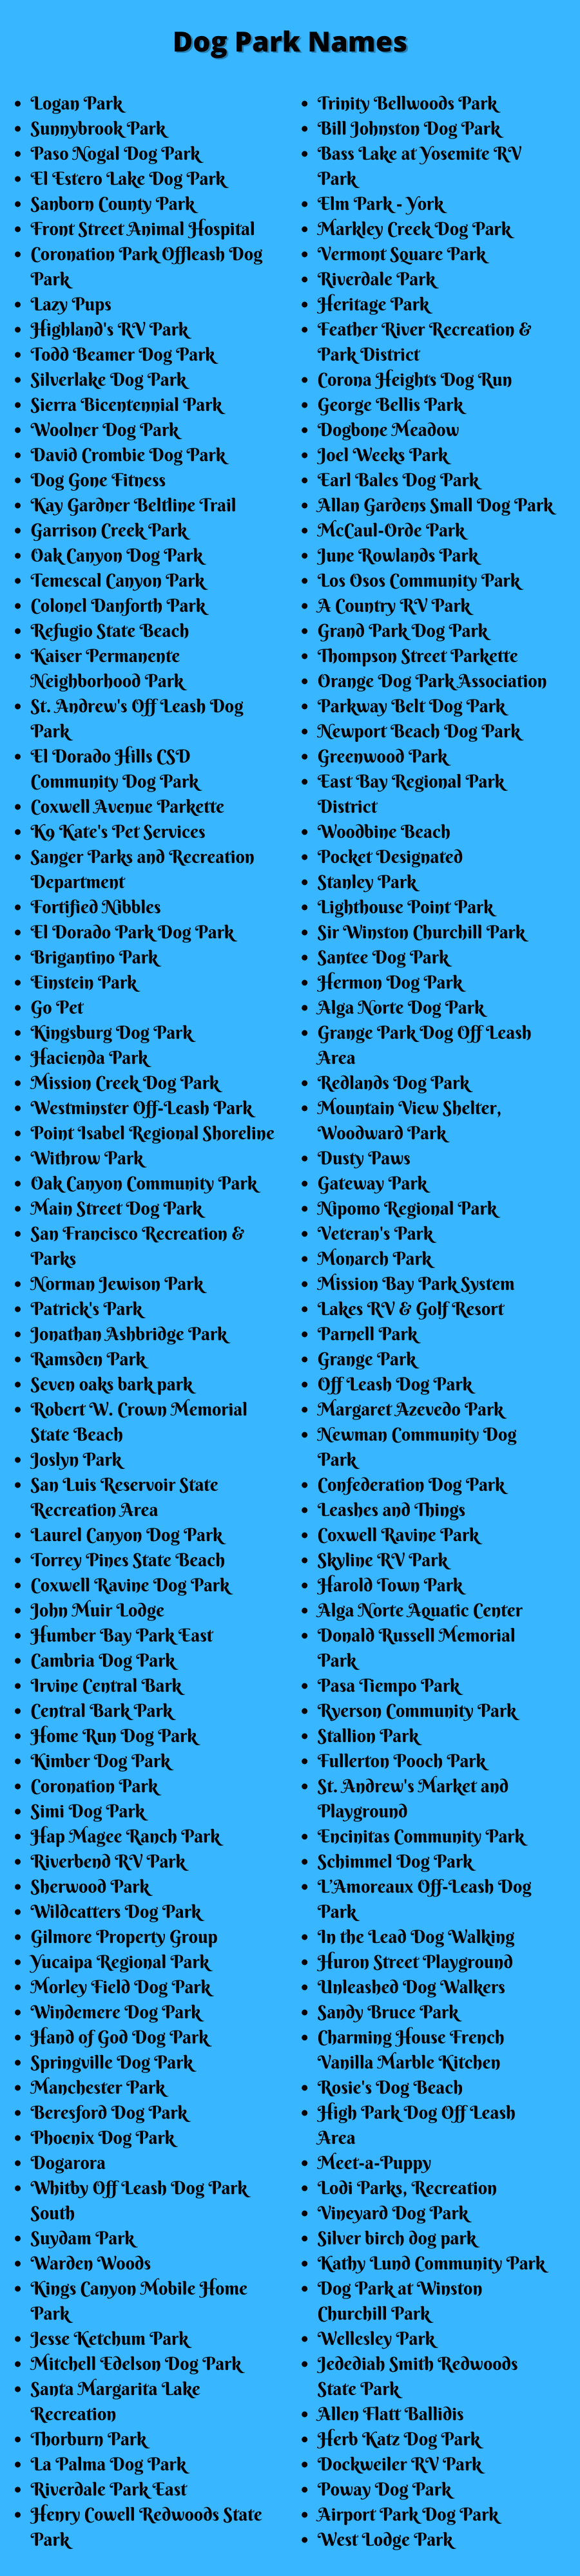 Dog Park Names